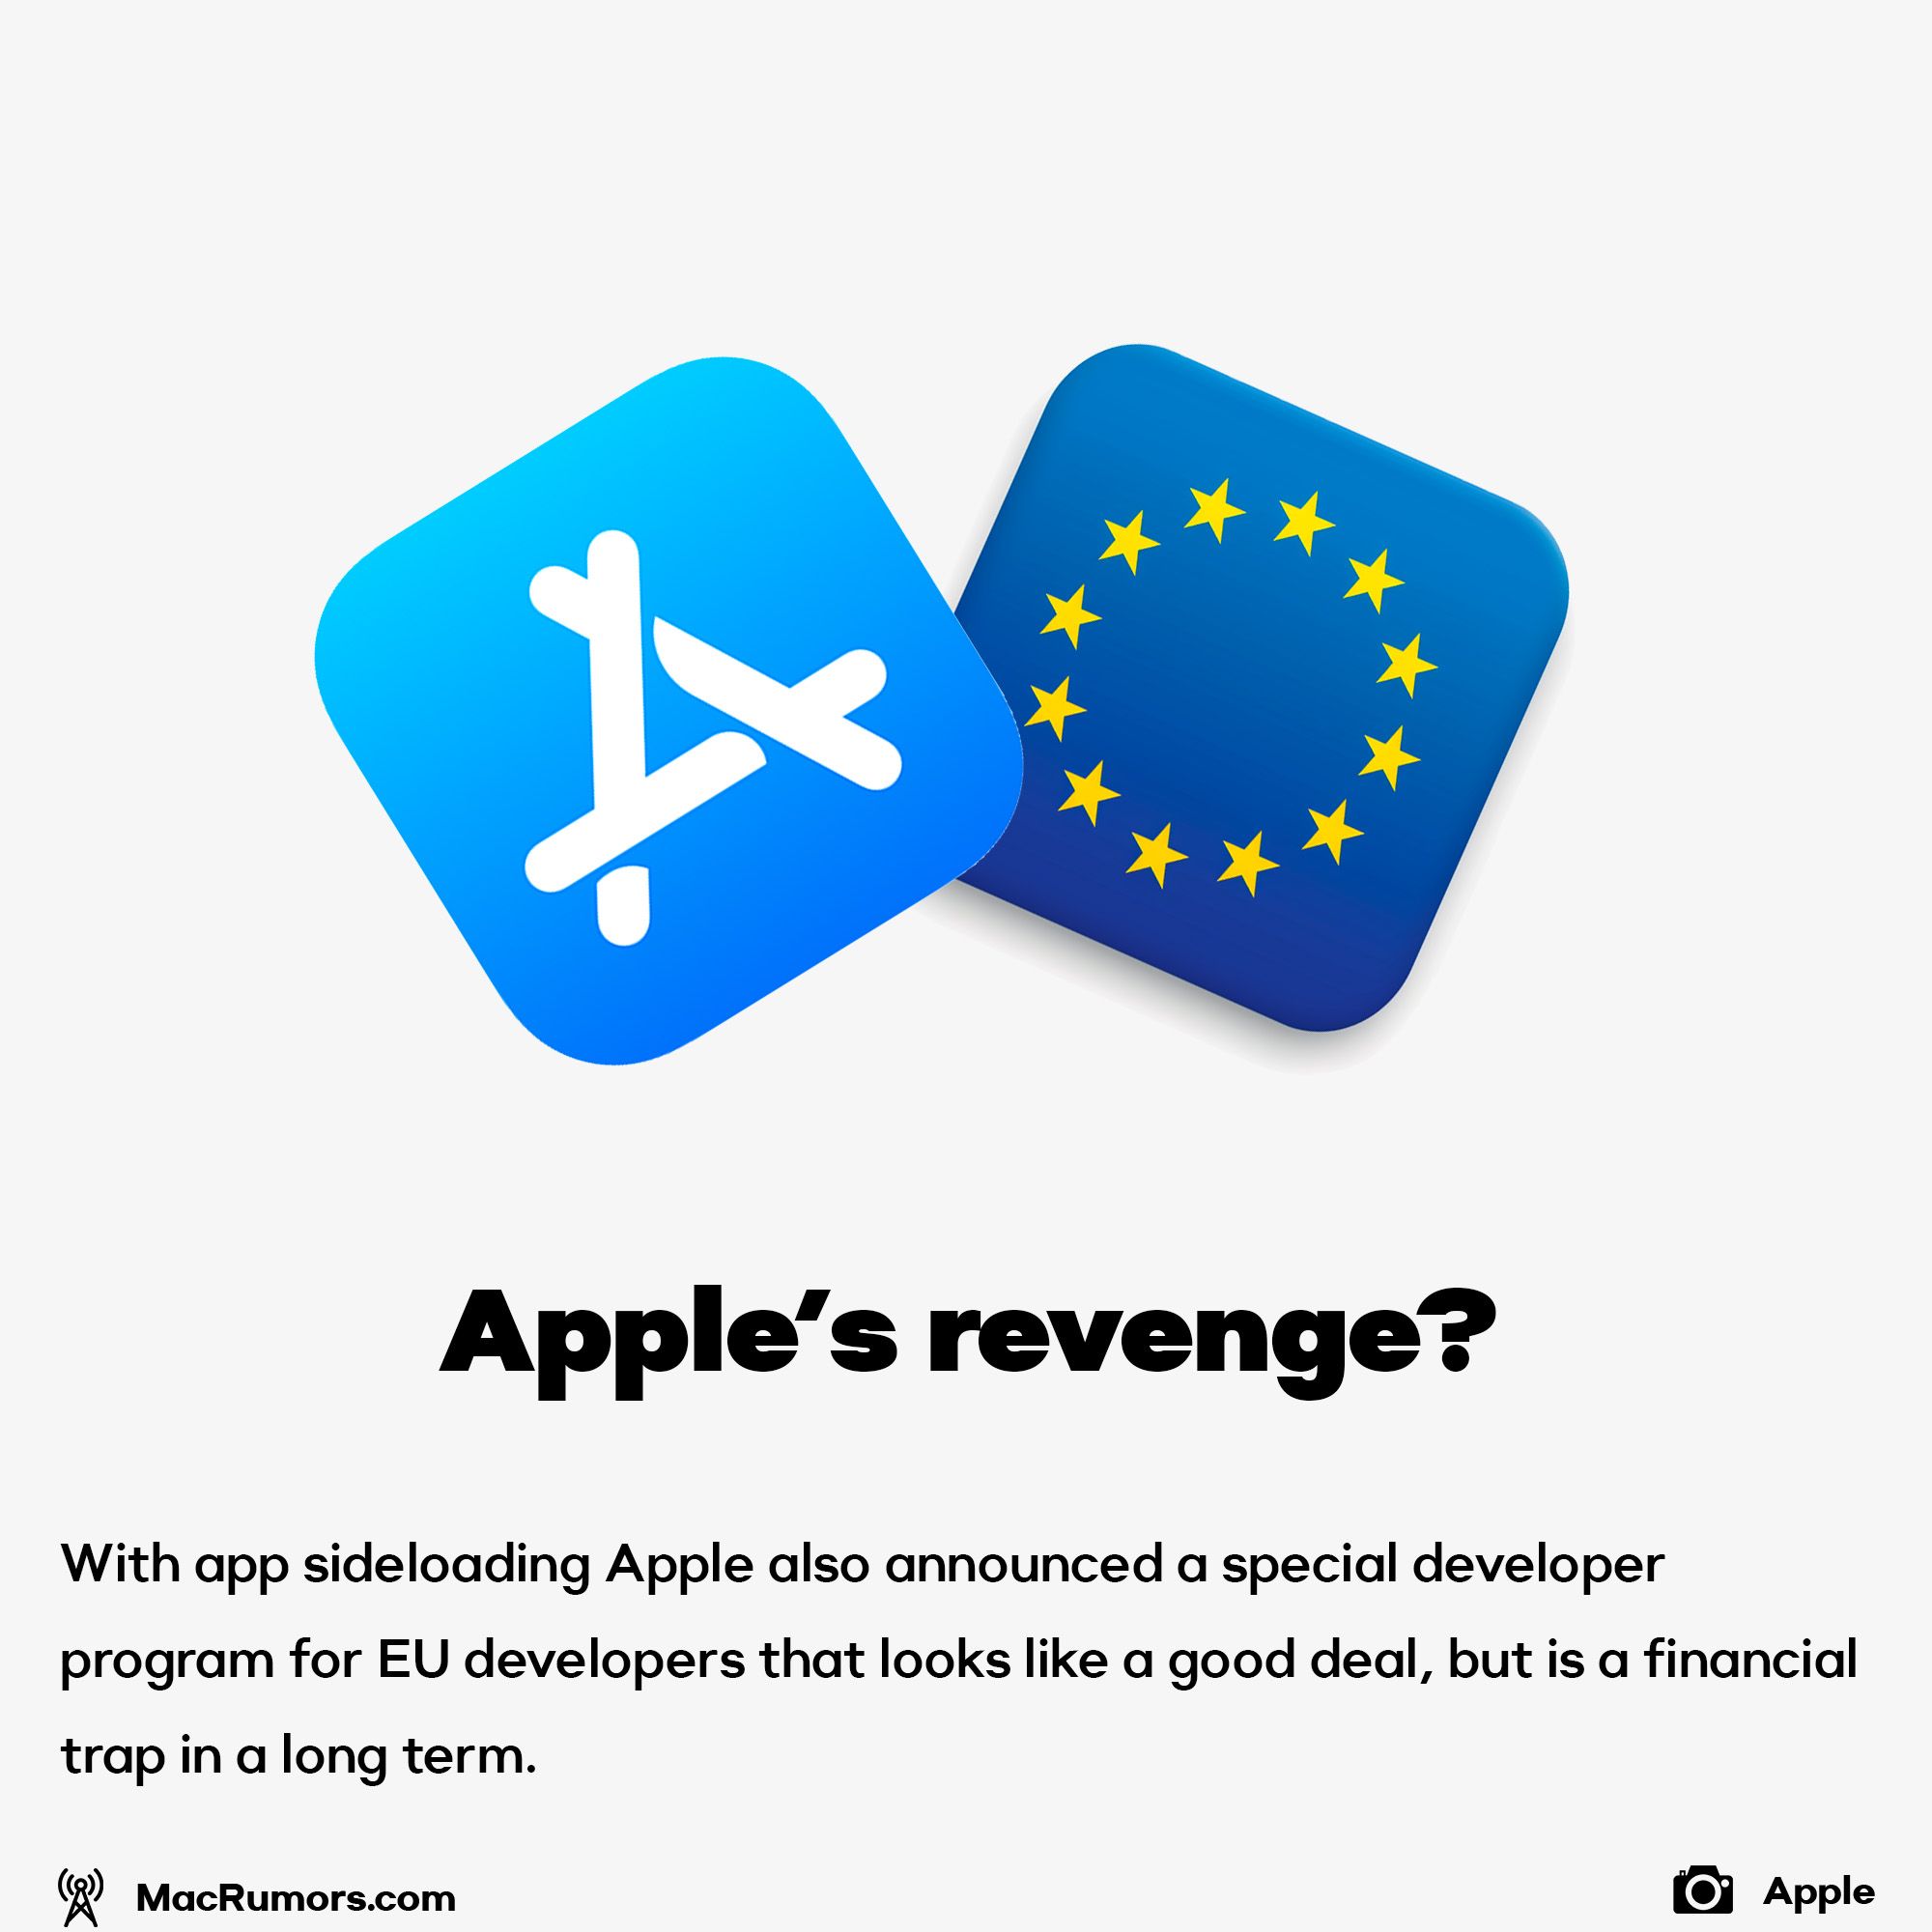 Apple announced a special developer program in EU